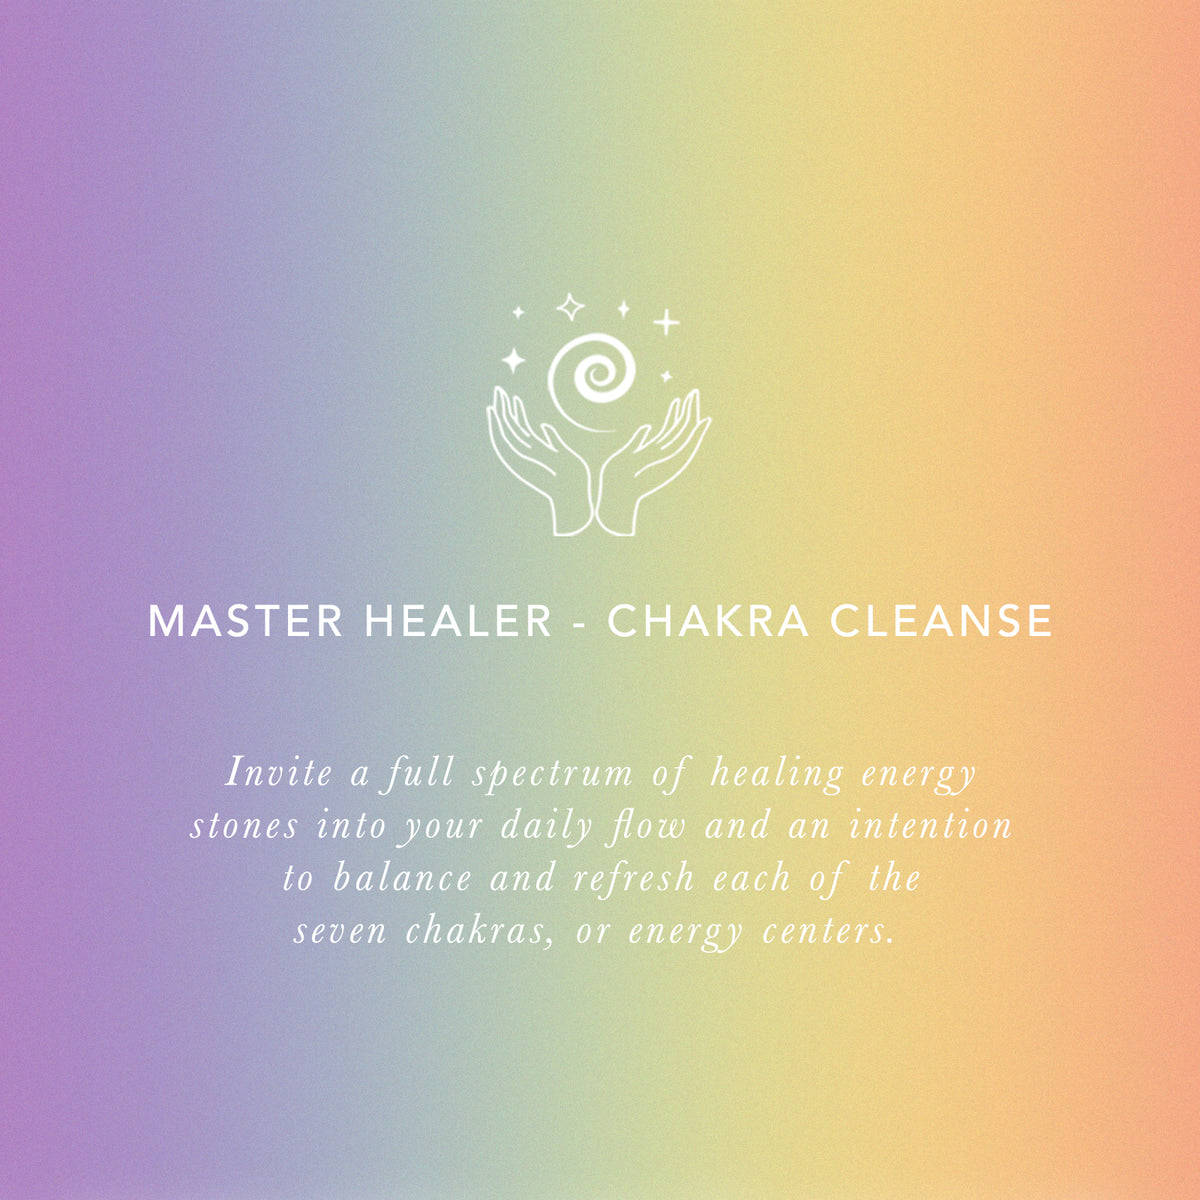 Master Healer Namaste Bracelet